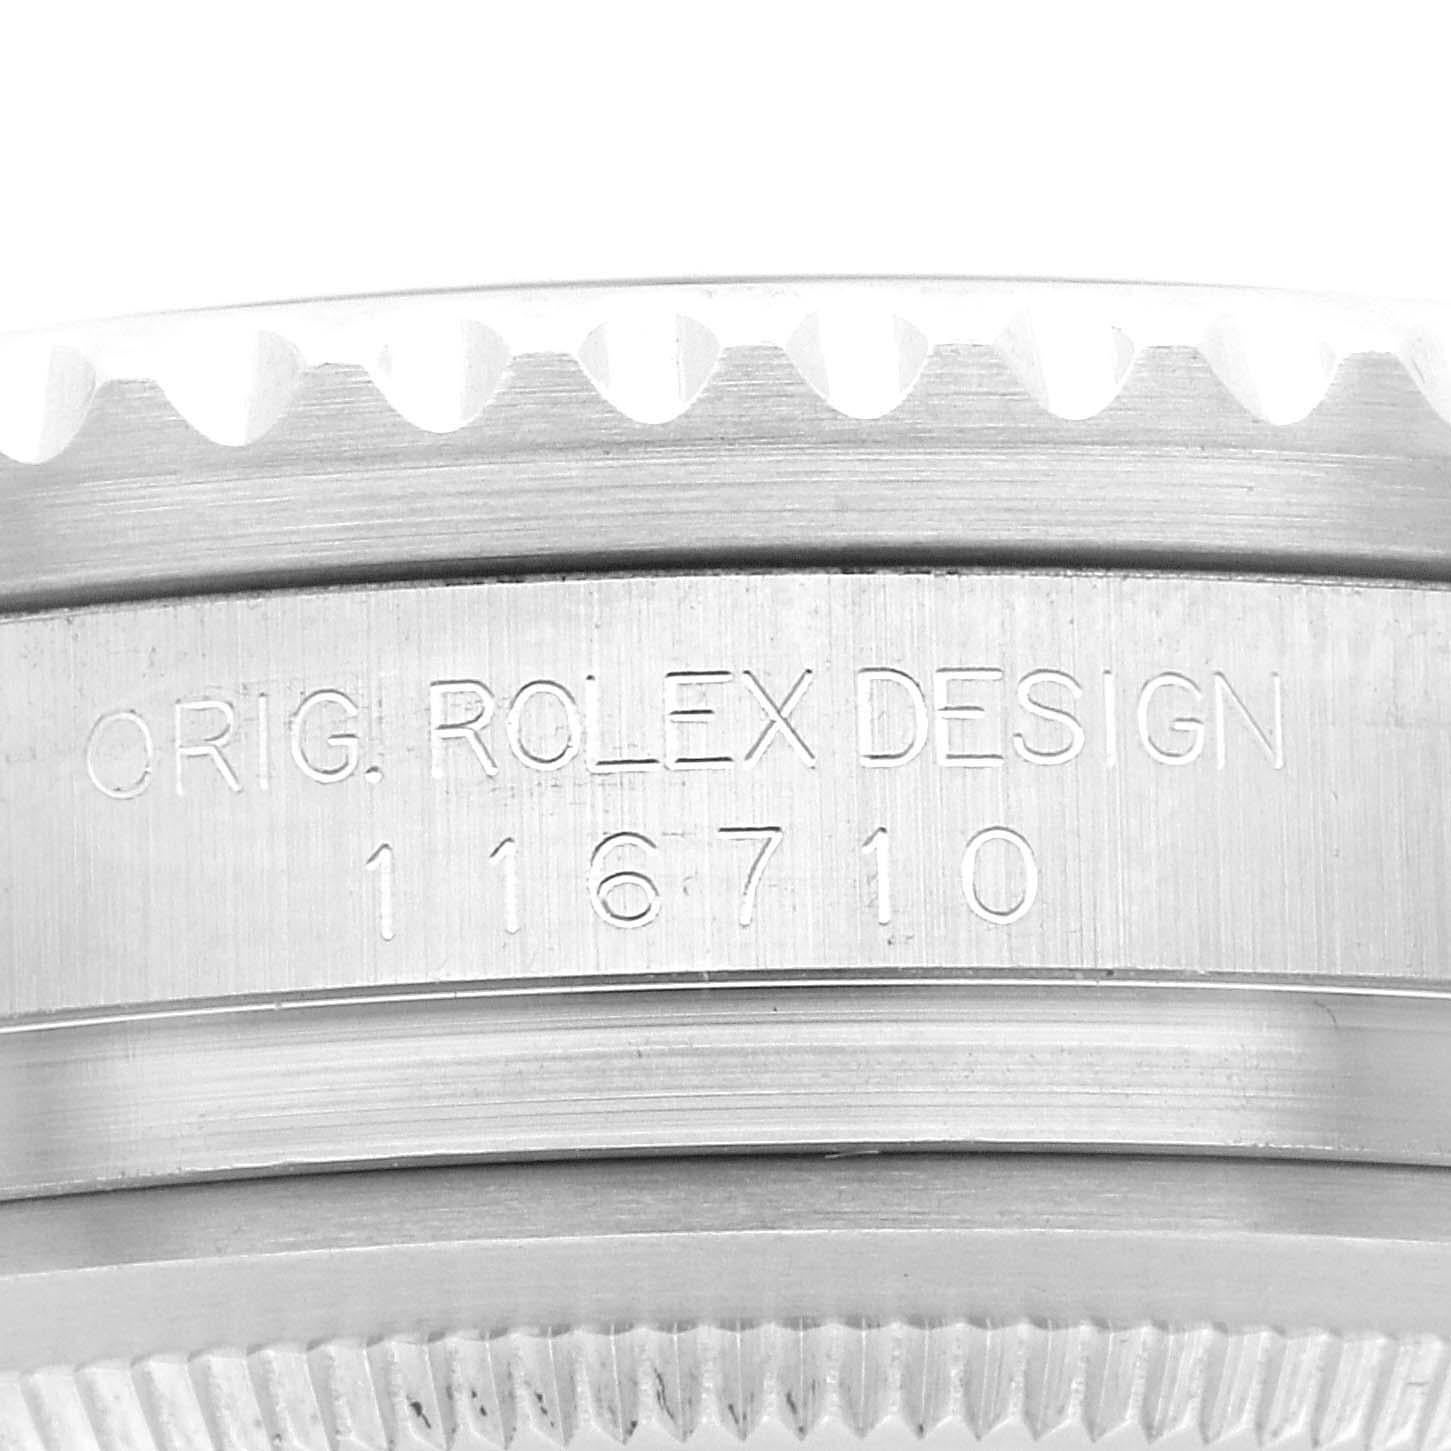 Rolex GMT Master II Black Dial Green Hand Steel Mens Watch 116710 Box Card 4